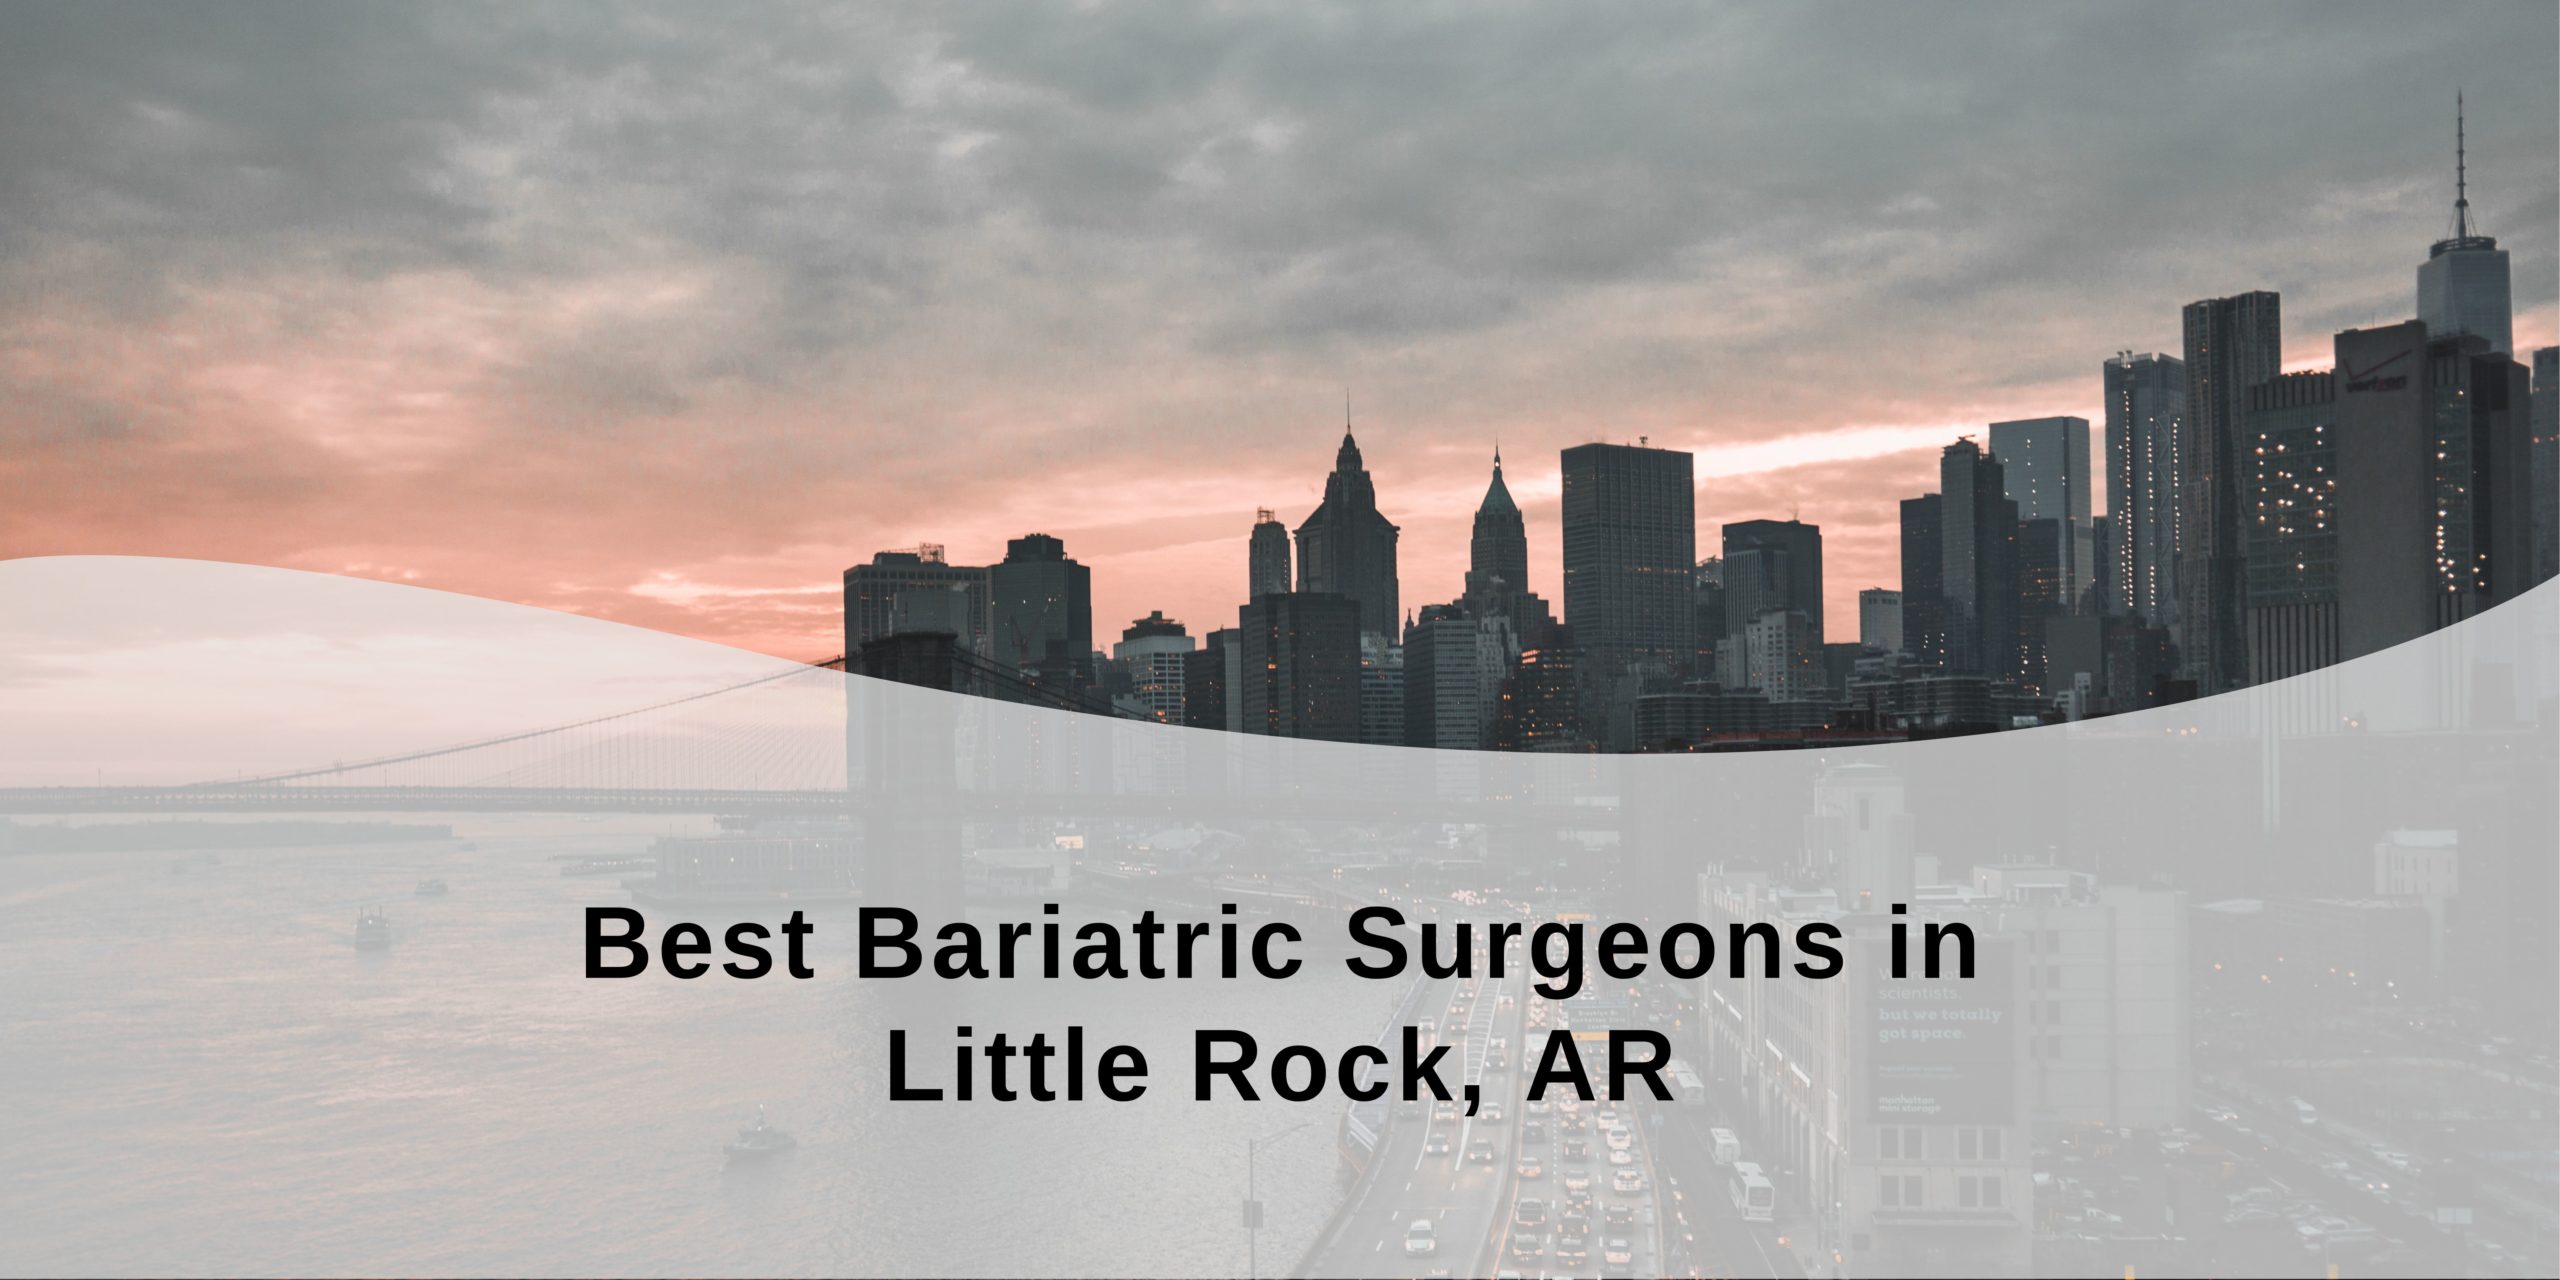 Best Bariatric Surgeons in Little Rock, AR